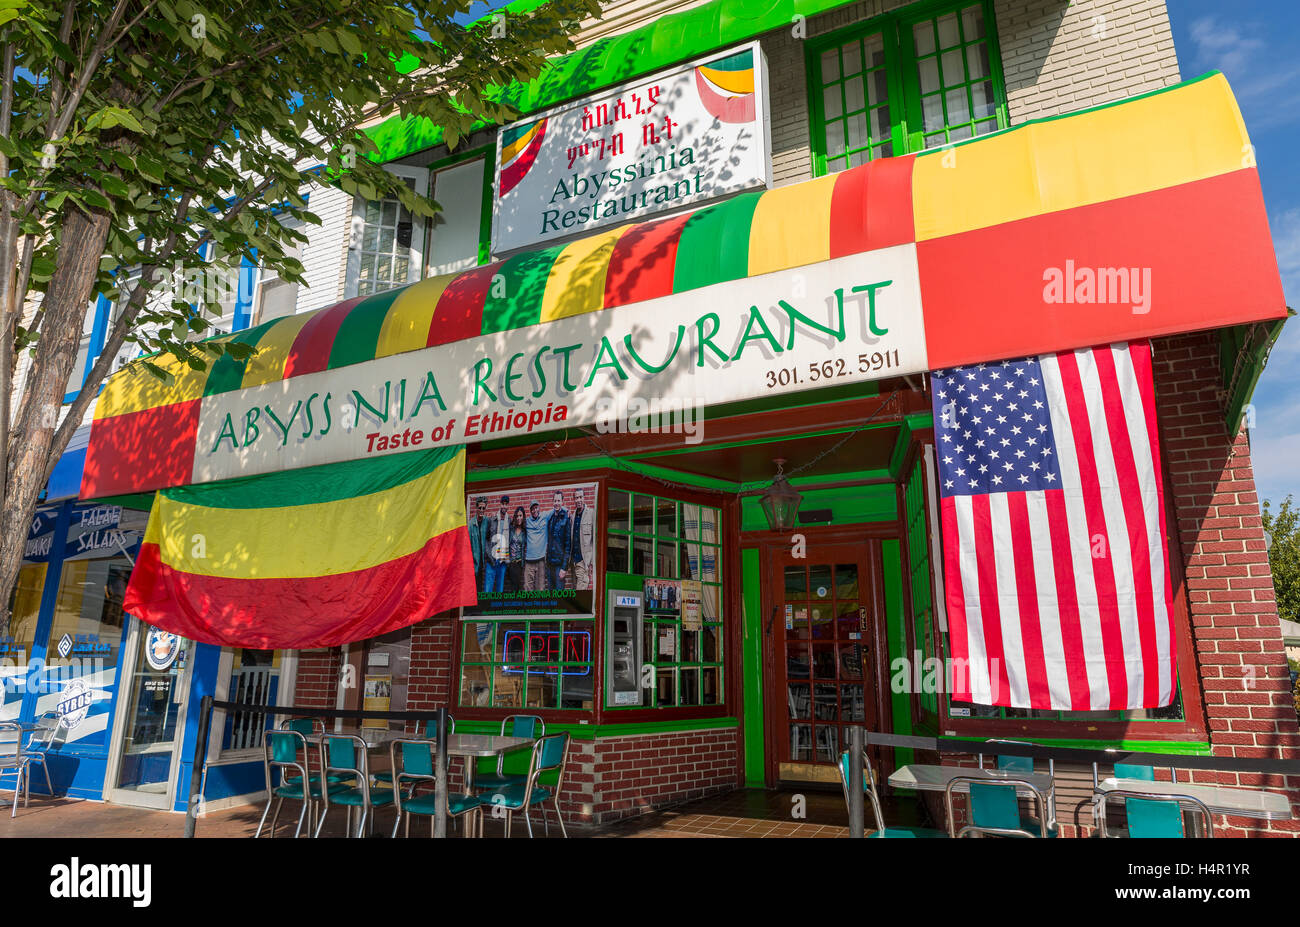 SILVER SPRING, MARYLAND, USA - Abyssinia Ethiopian Restaurant on Georgia Avenue. Flags of Ethiopia and USA. Stock Photo